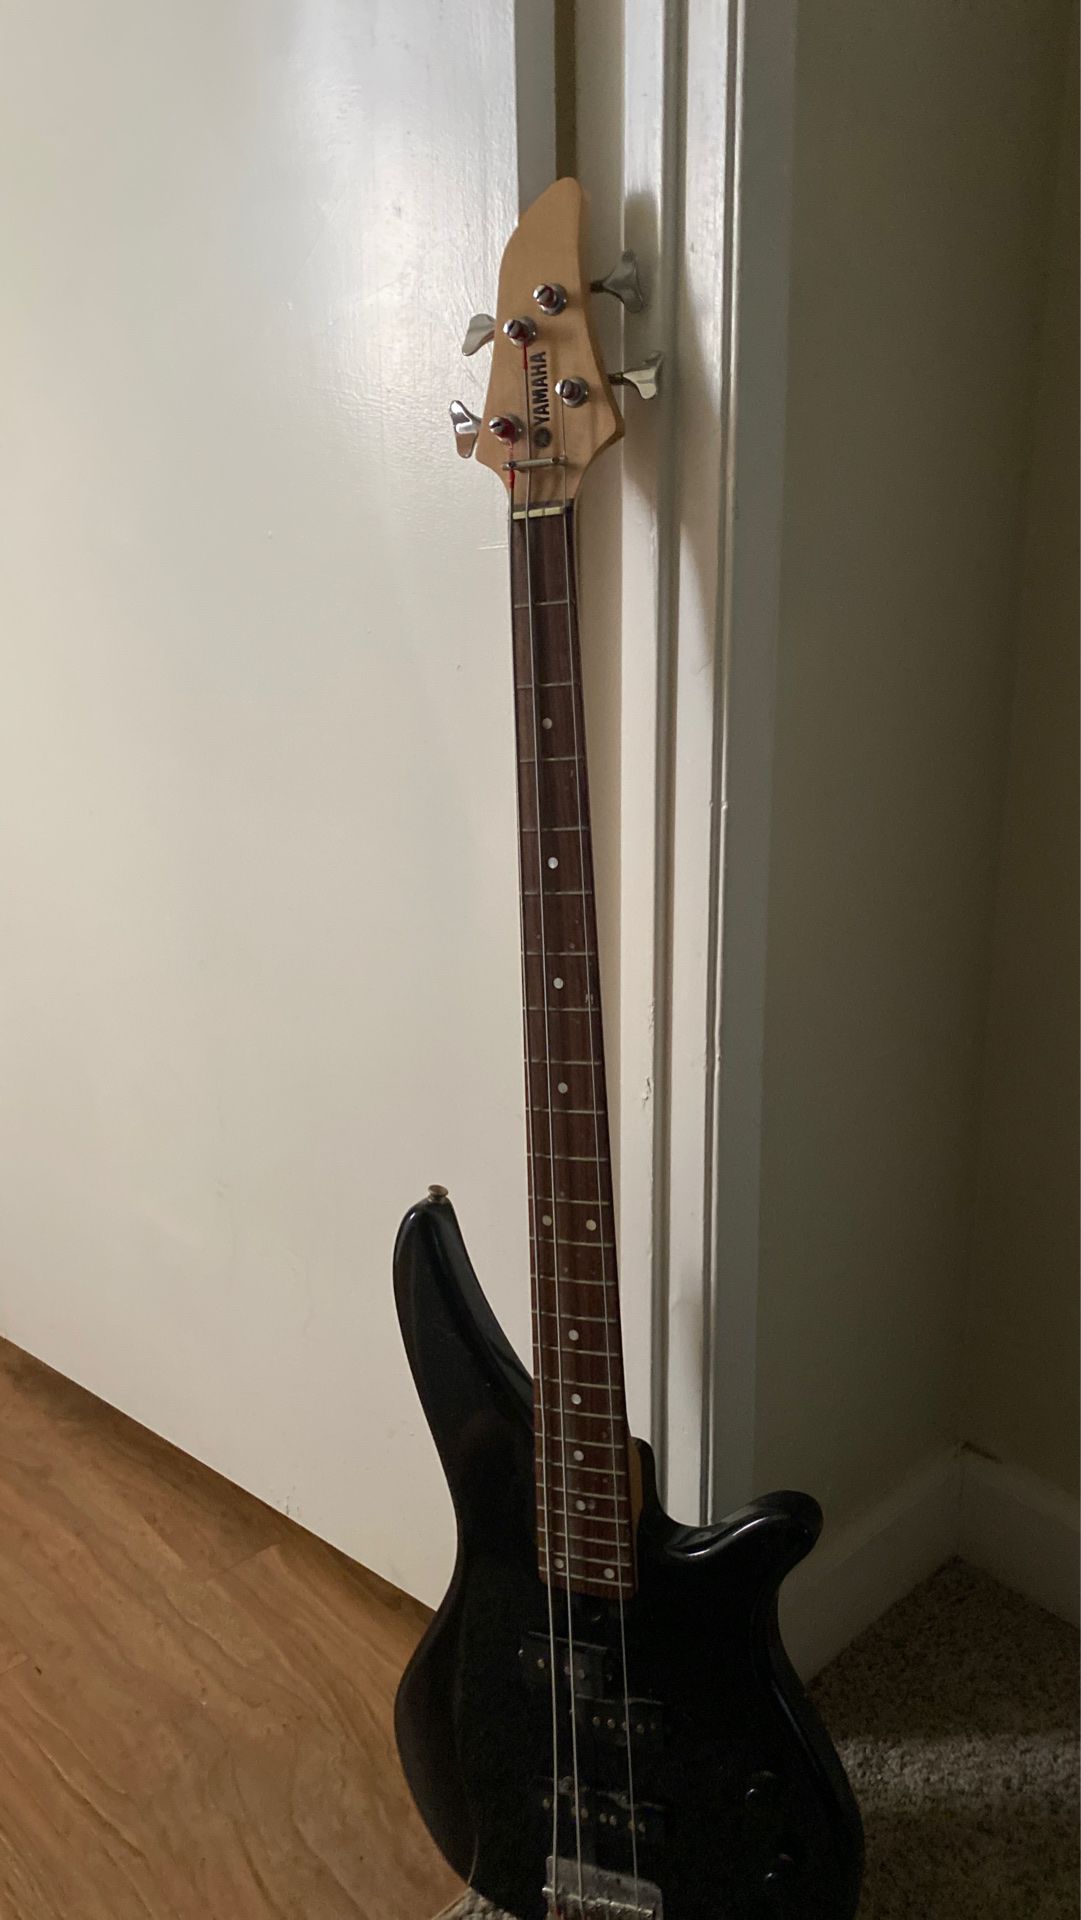 Yamaha Bass guitar